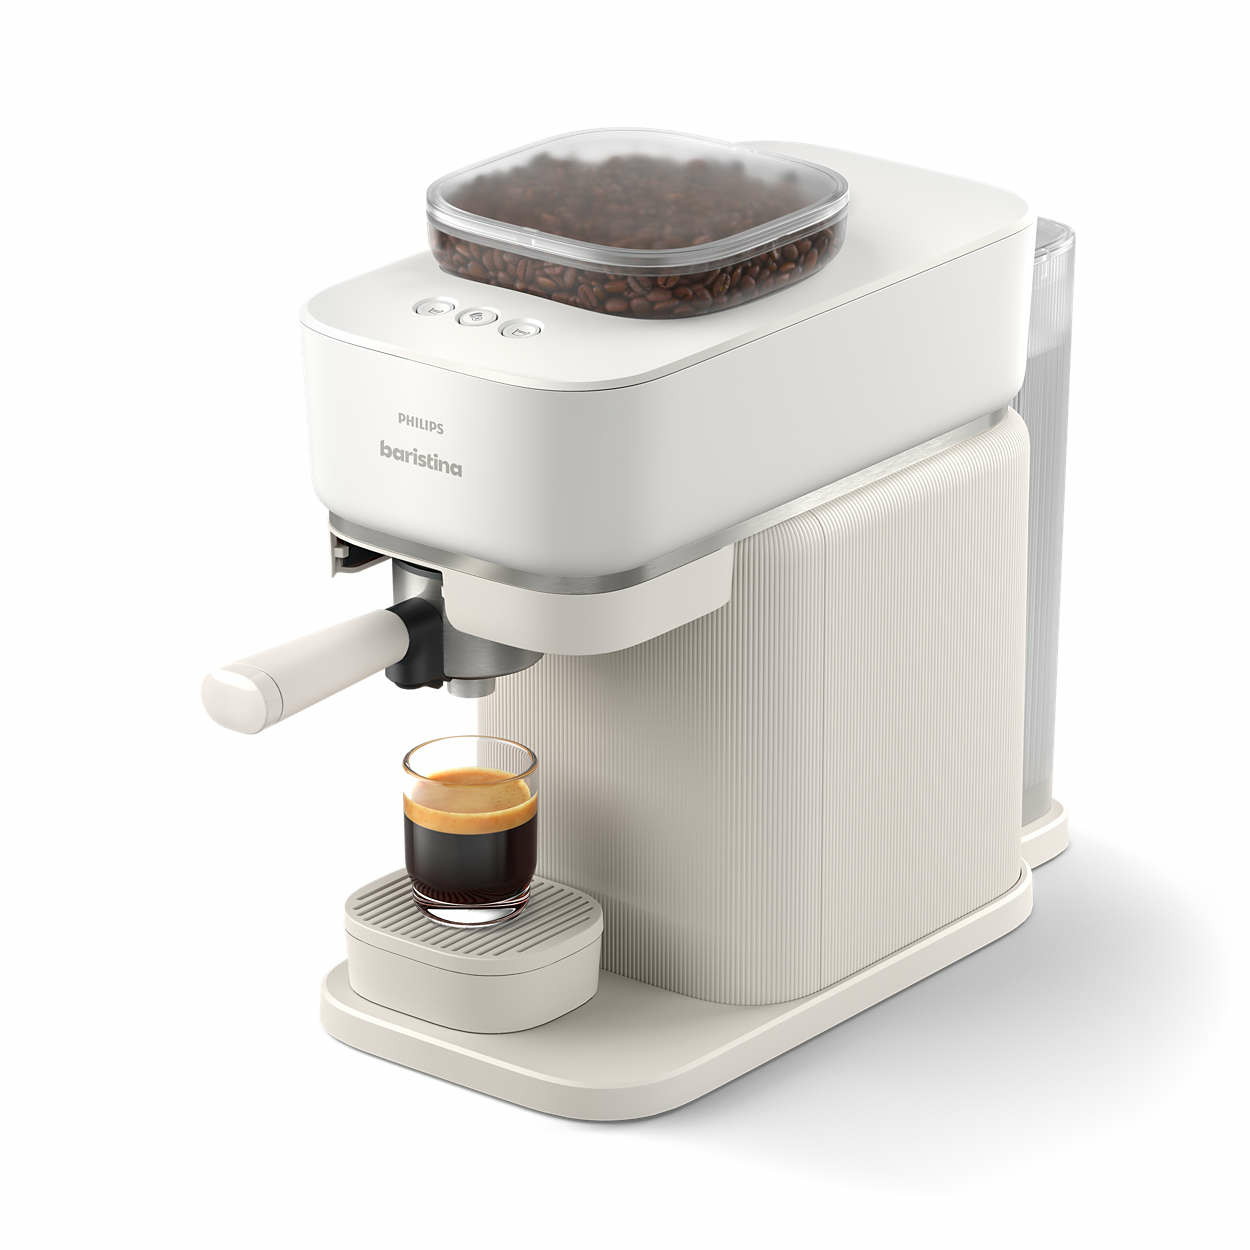 Philips BAR303/00 coffee maker